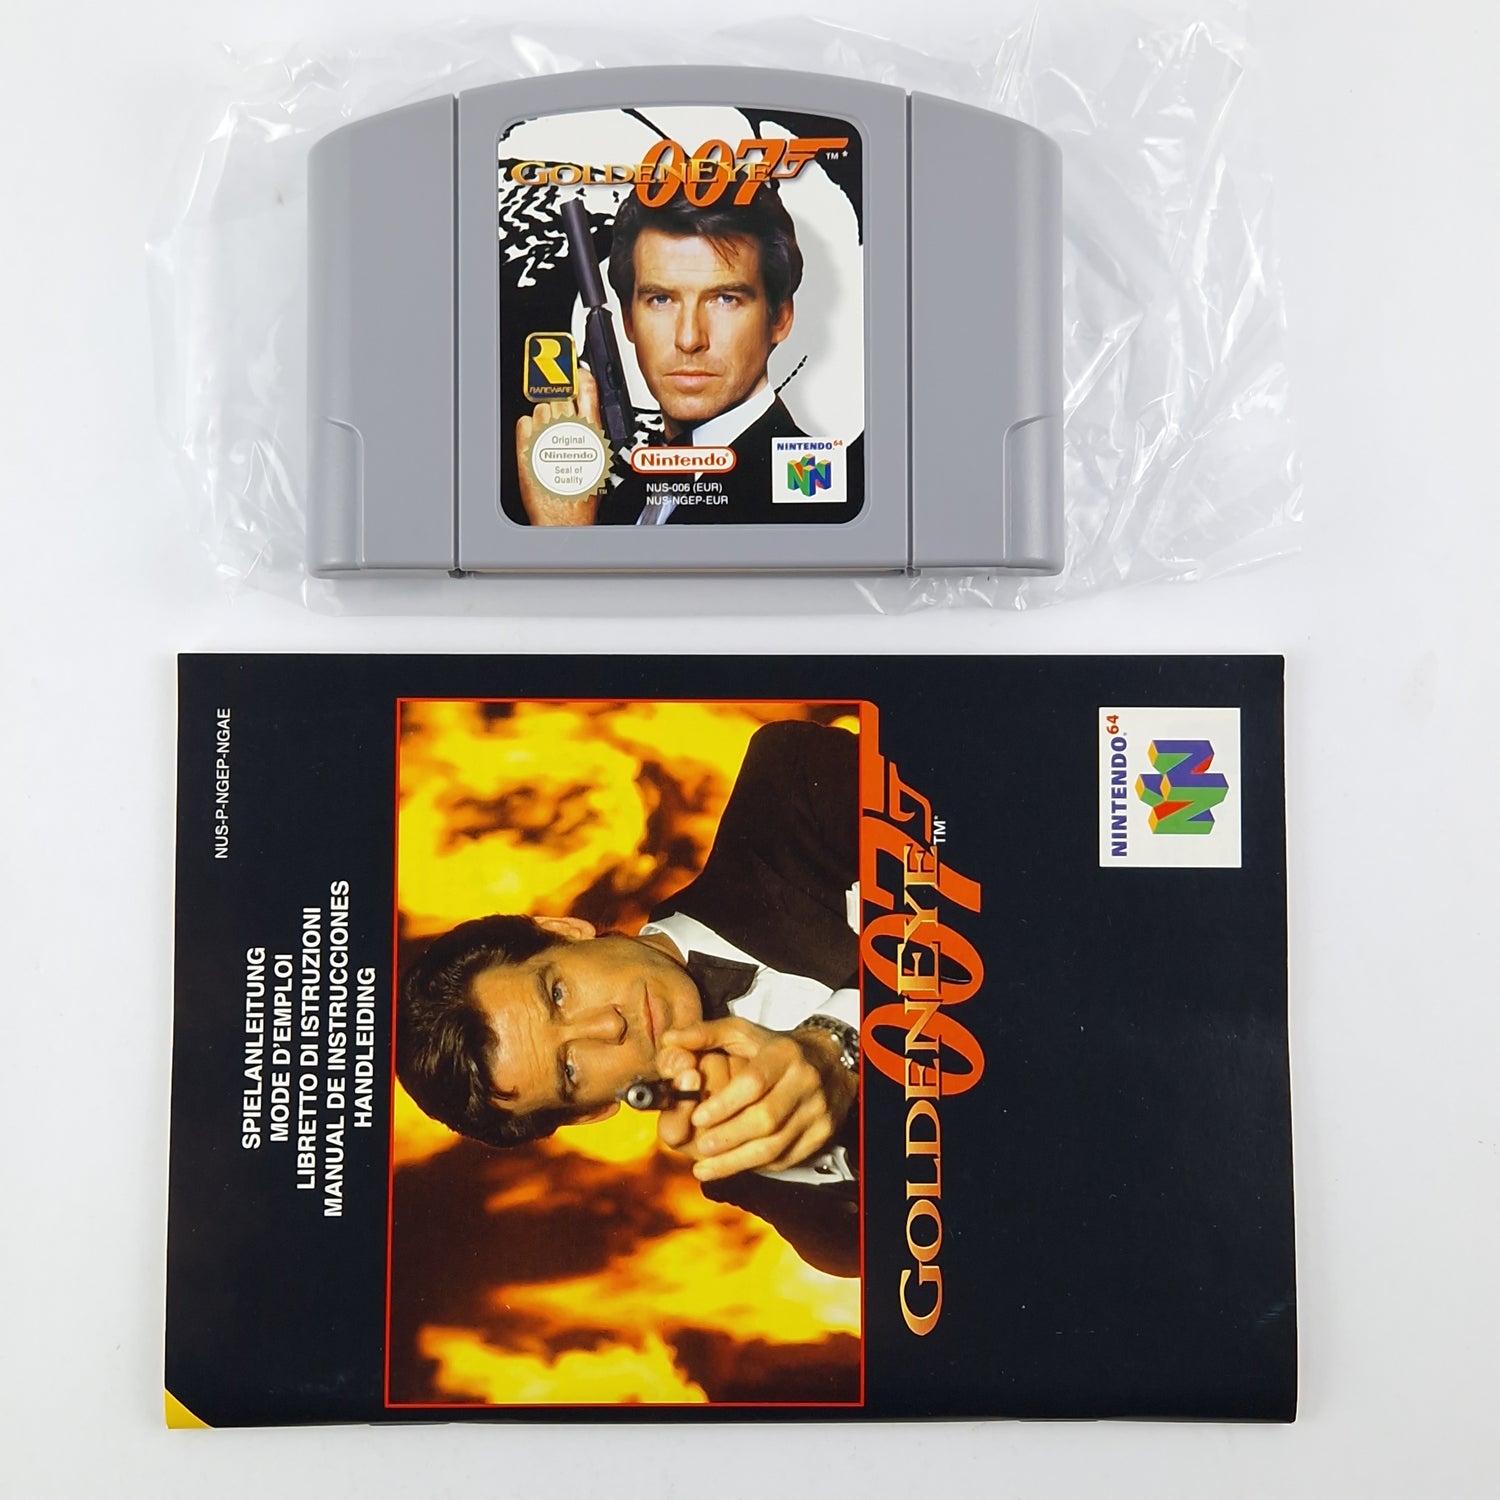 Nintendo 64 Game: James Bond Golden Eye 007 - Module Instructions OVP cib N64 PAL